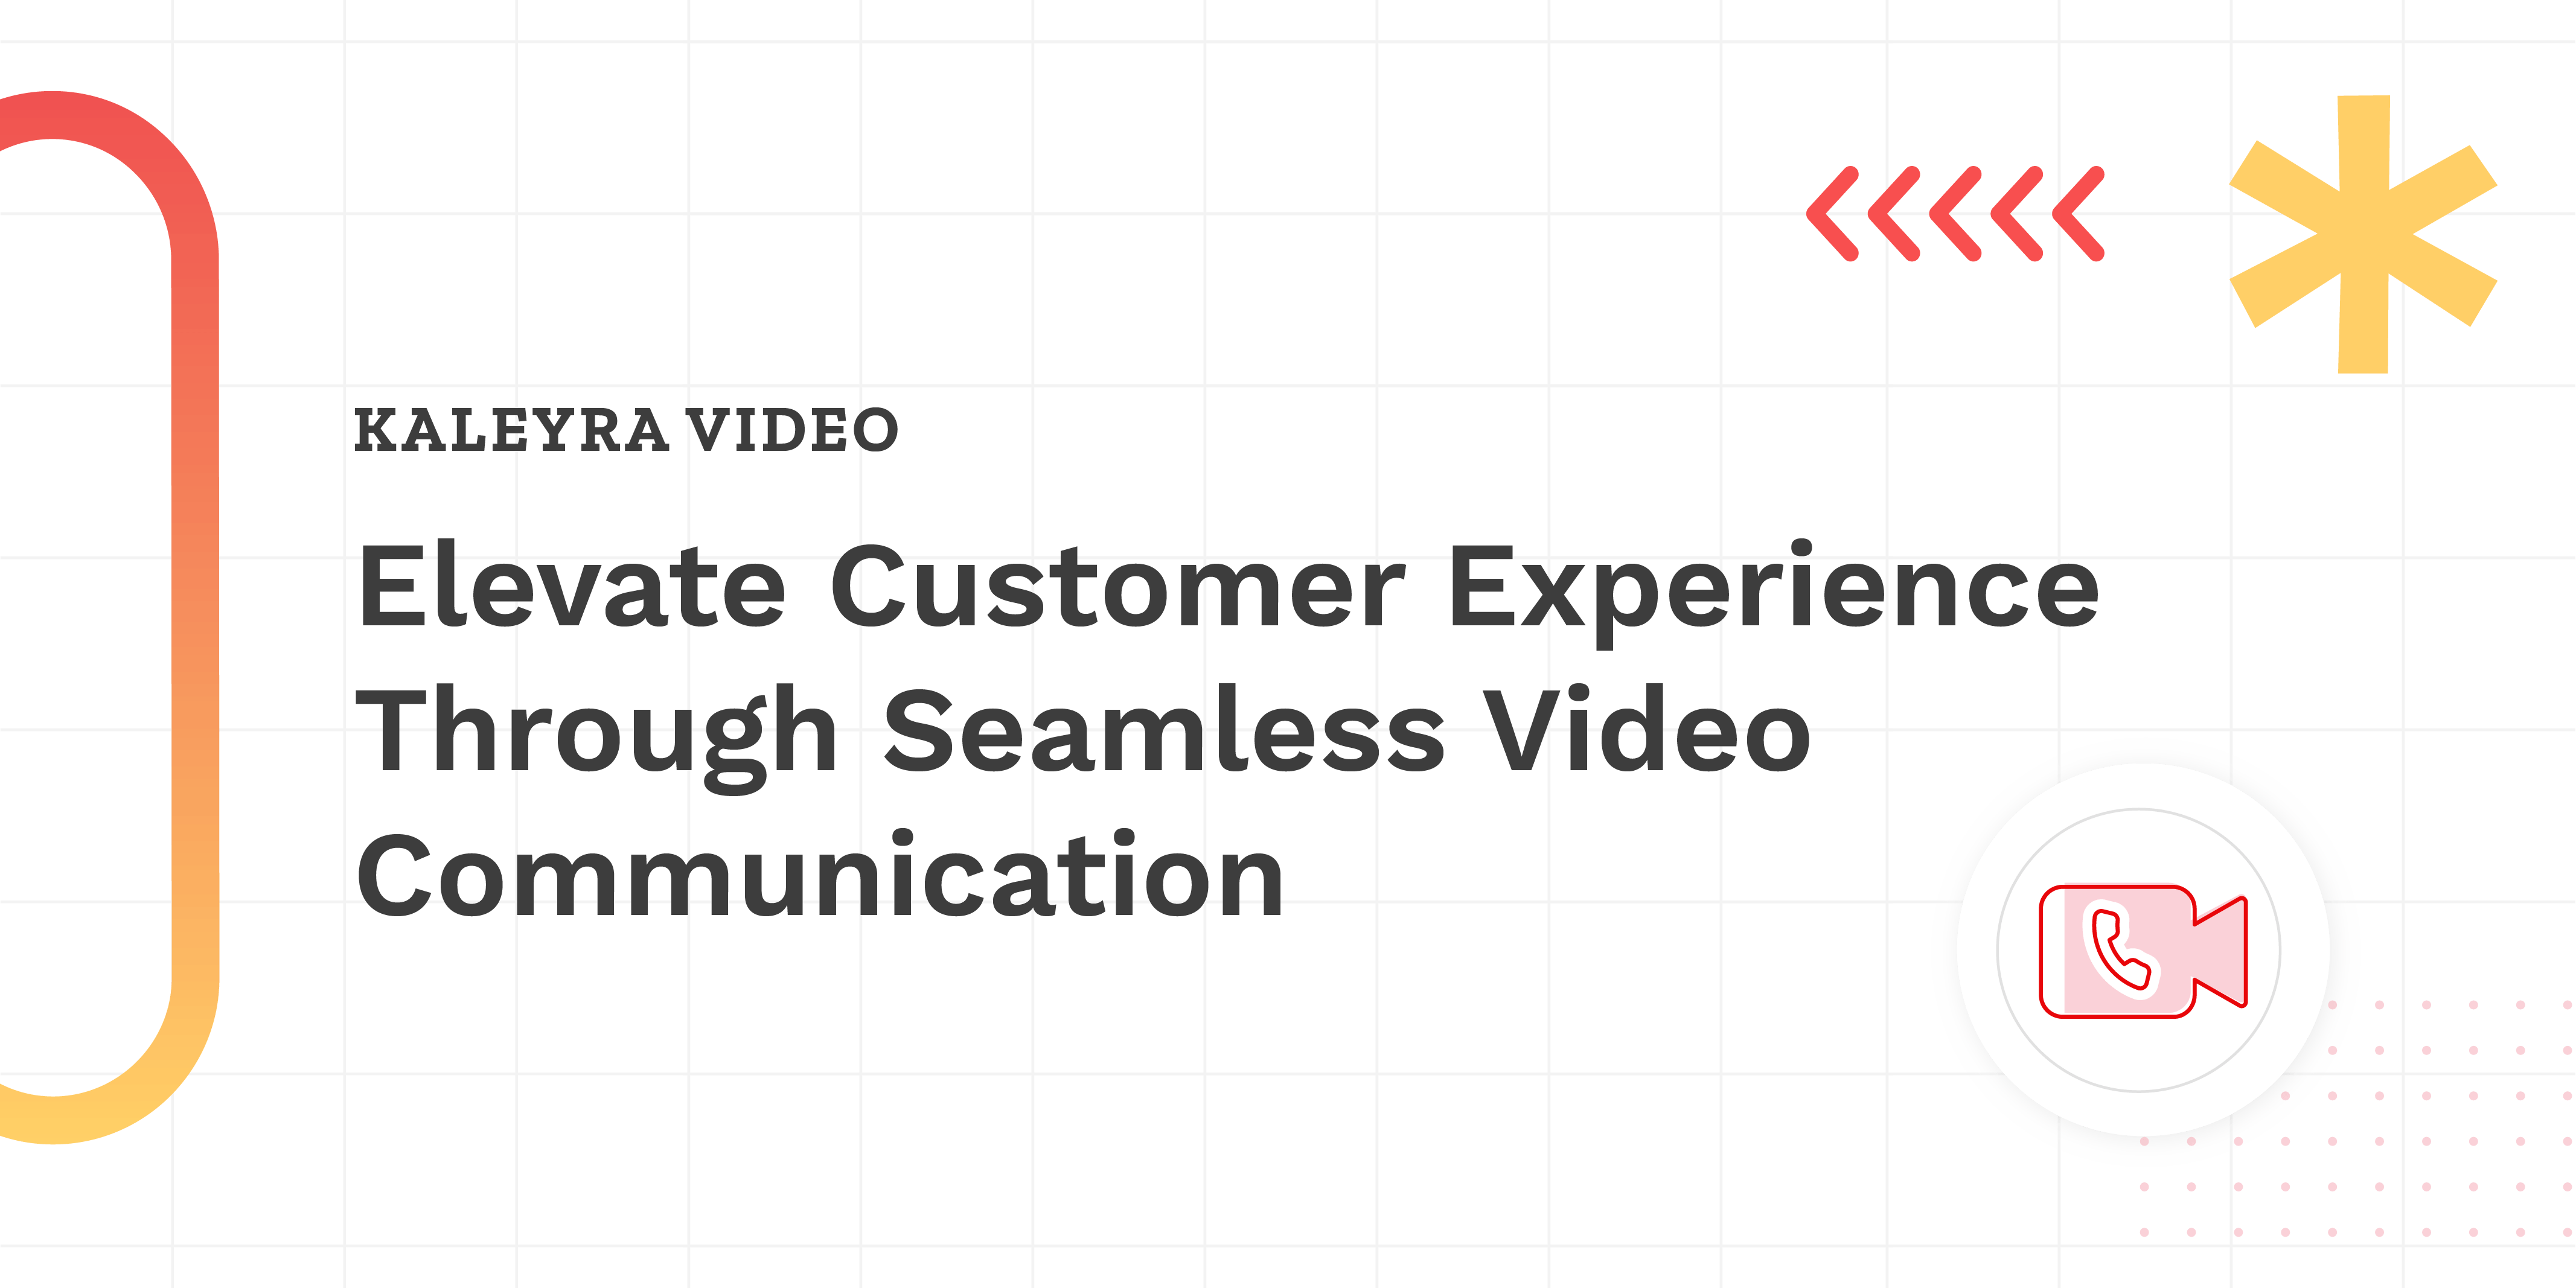 Kaleyra Video: Elevate Customer Experience Through Seamless Video Communication